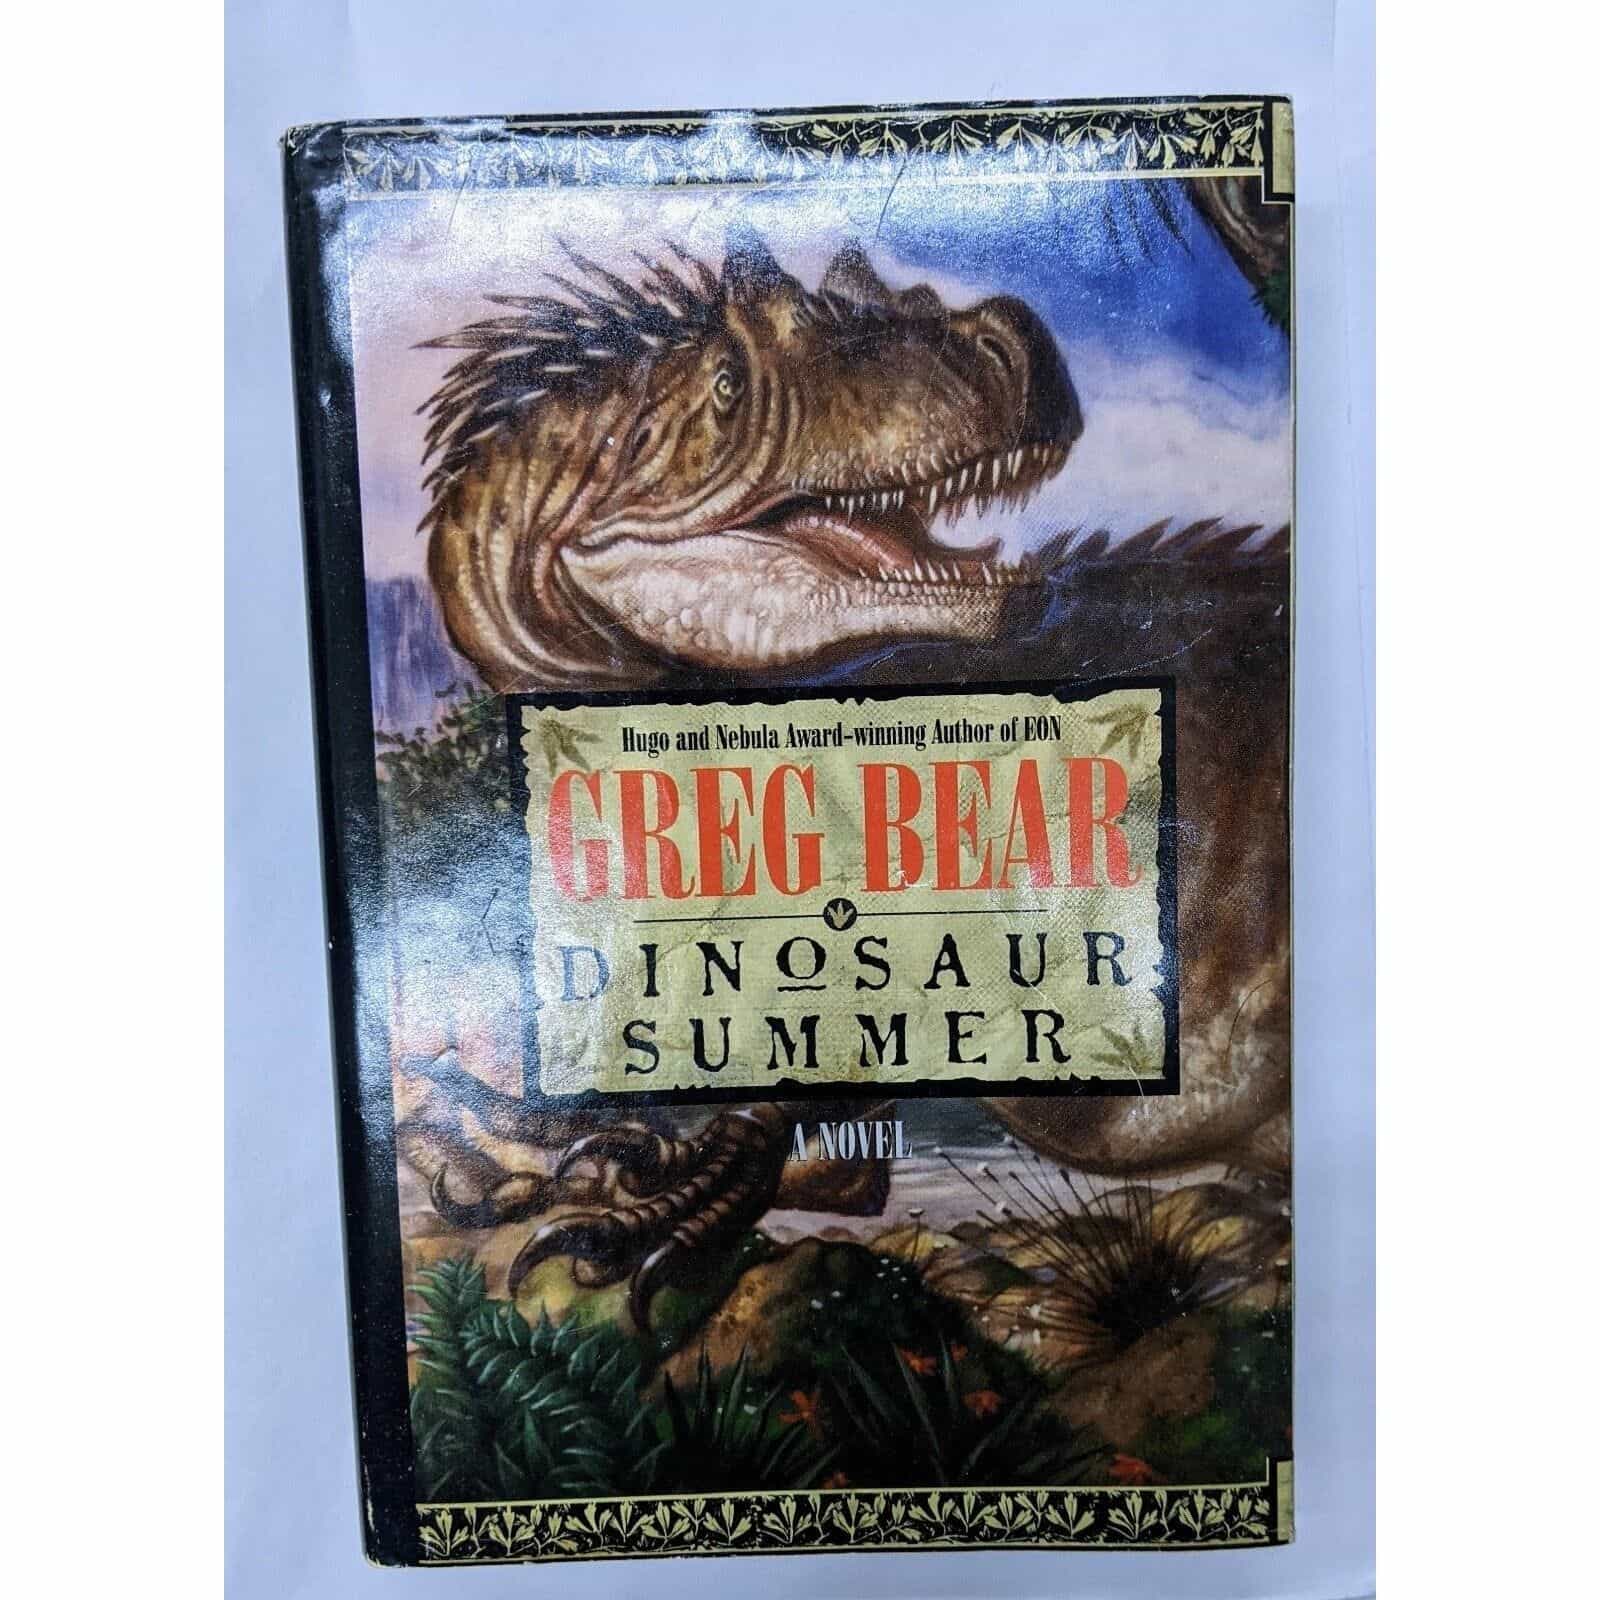 Dinosaur Summer by Greg Bear Book